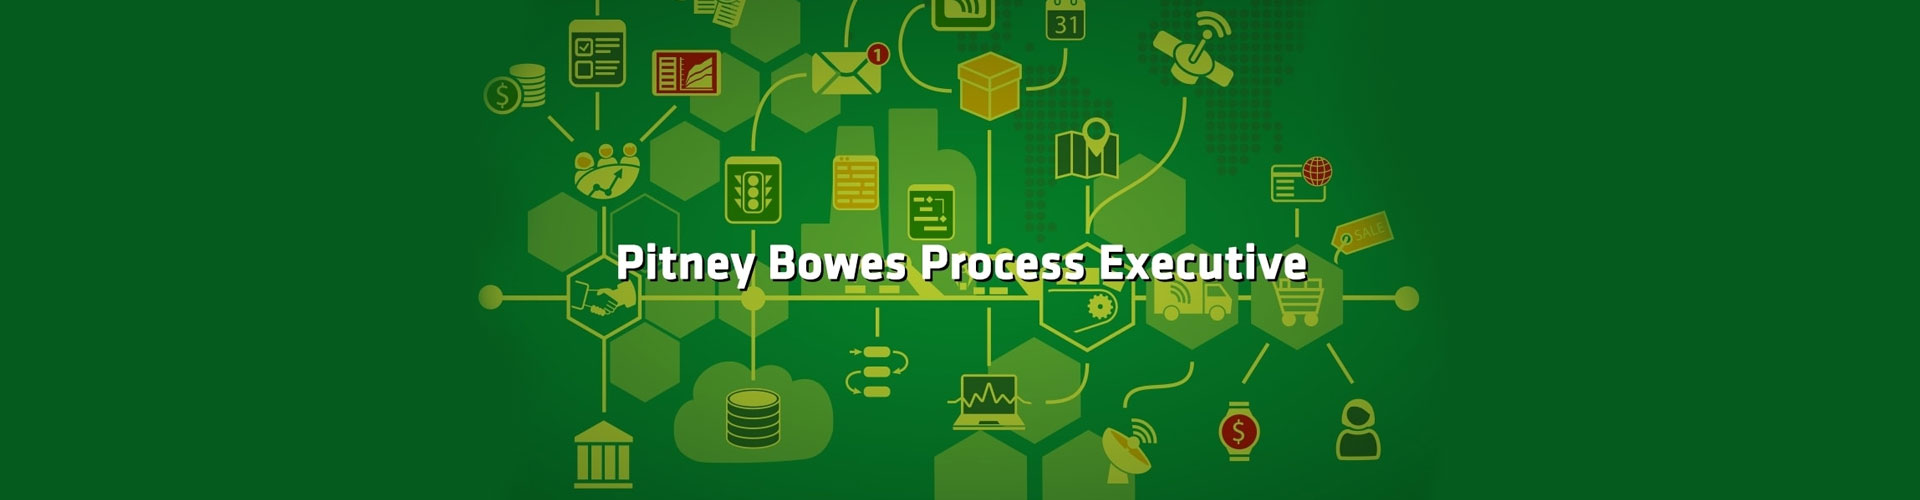 Pitney Bowes Process Executive